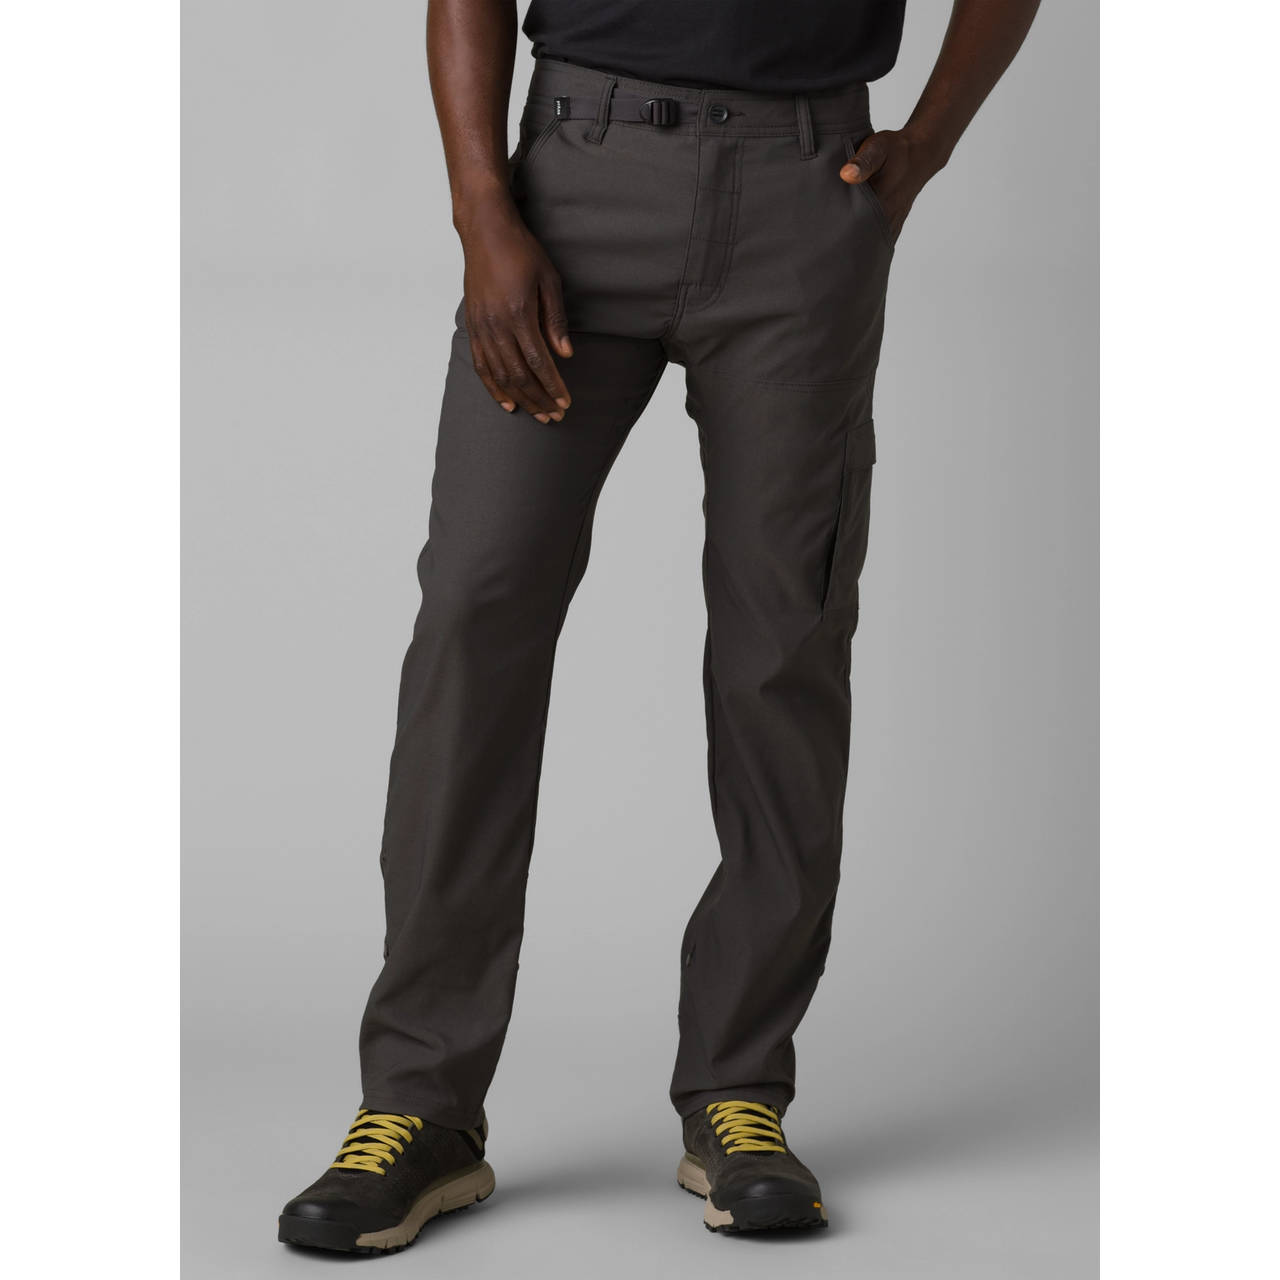 Stretch Zion Slim Pant II - Men's from Prana | Hiking & Climbing Pants |  BackcountryGear.com